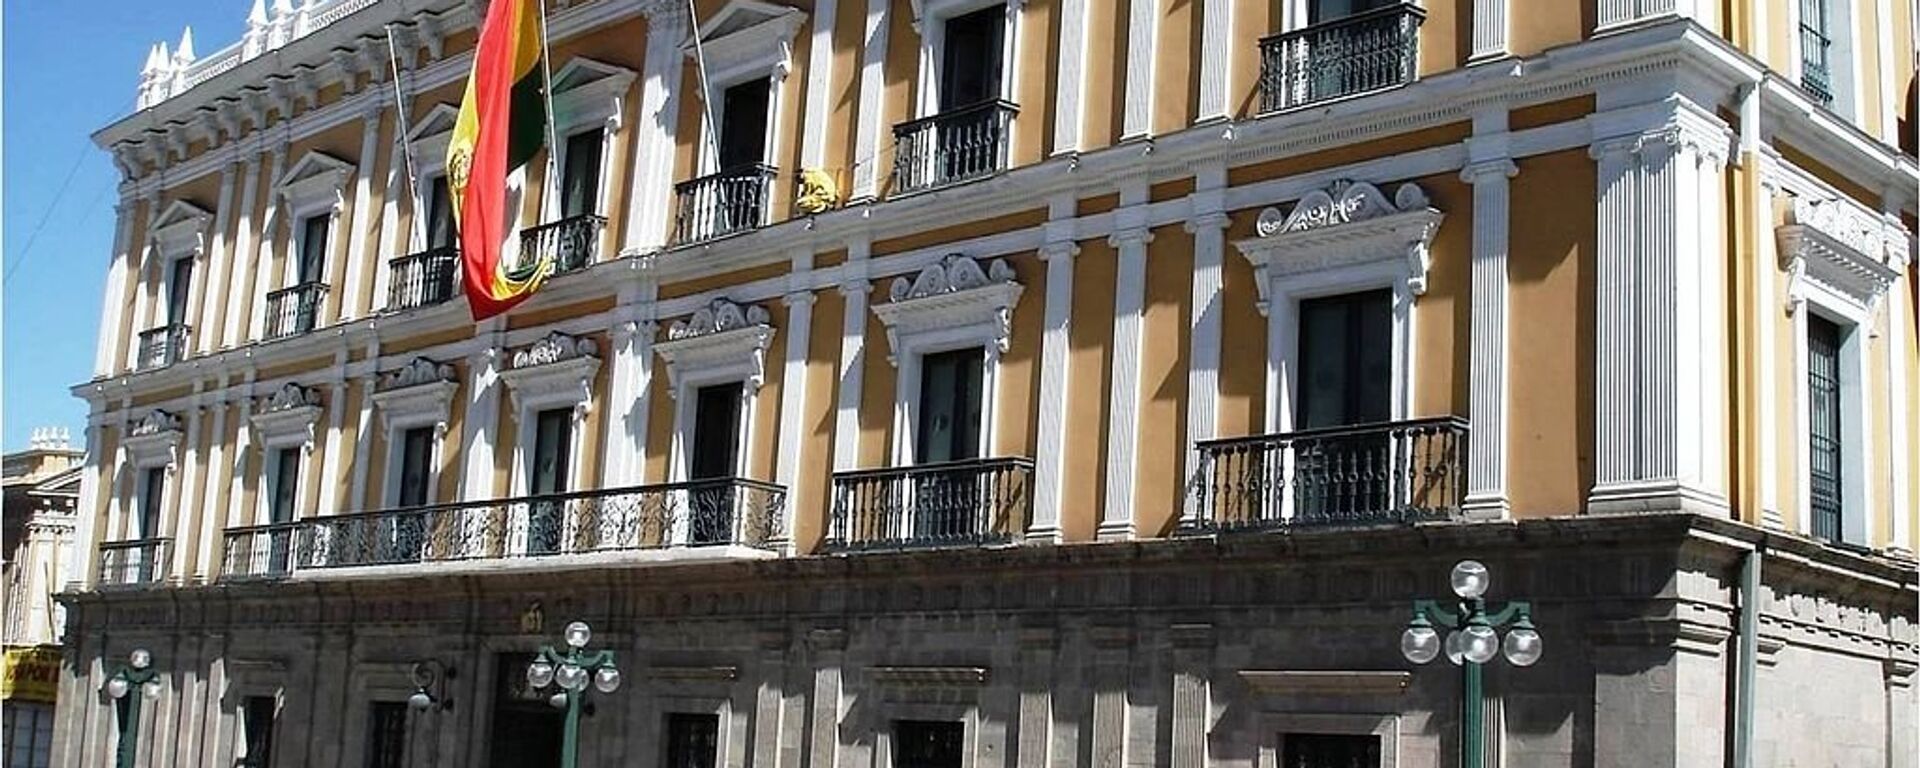 Palacio de Gobierno en La Paz, Bolivia. - Sputnik Mundo, 1920, 28.09.2021